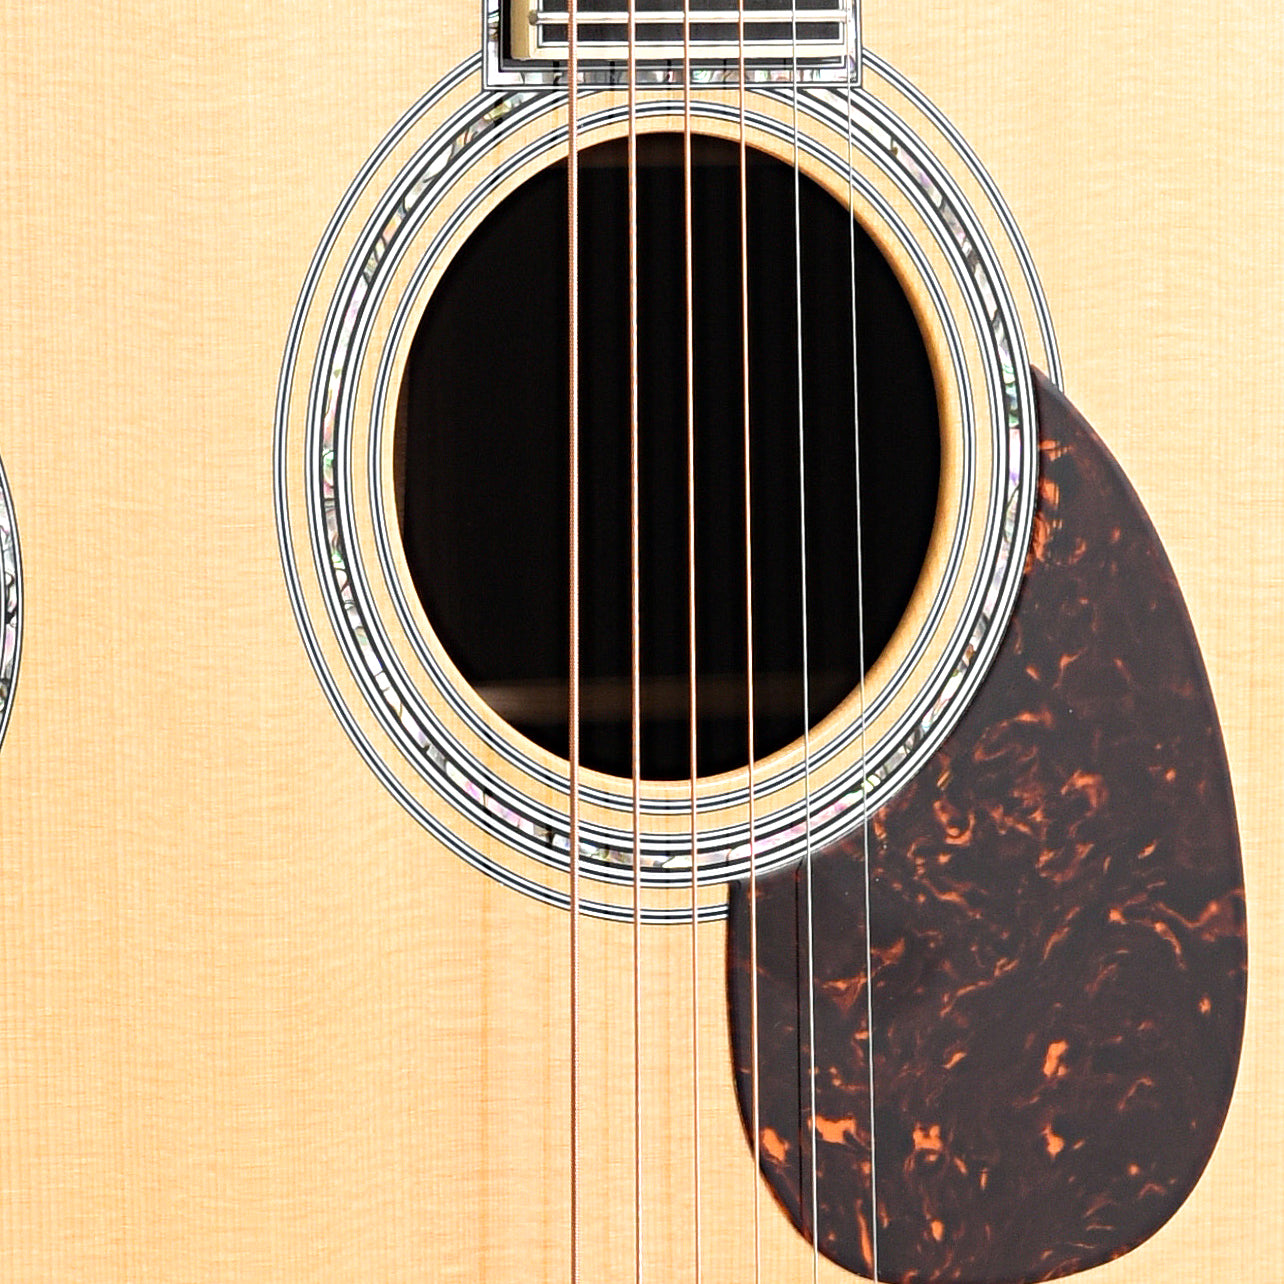 Soundhole and Pickguard of Martin OM-42 Guitar